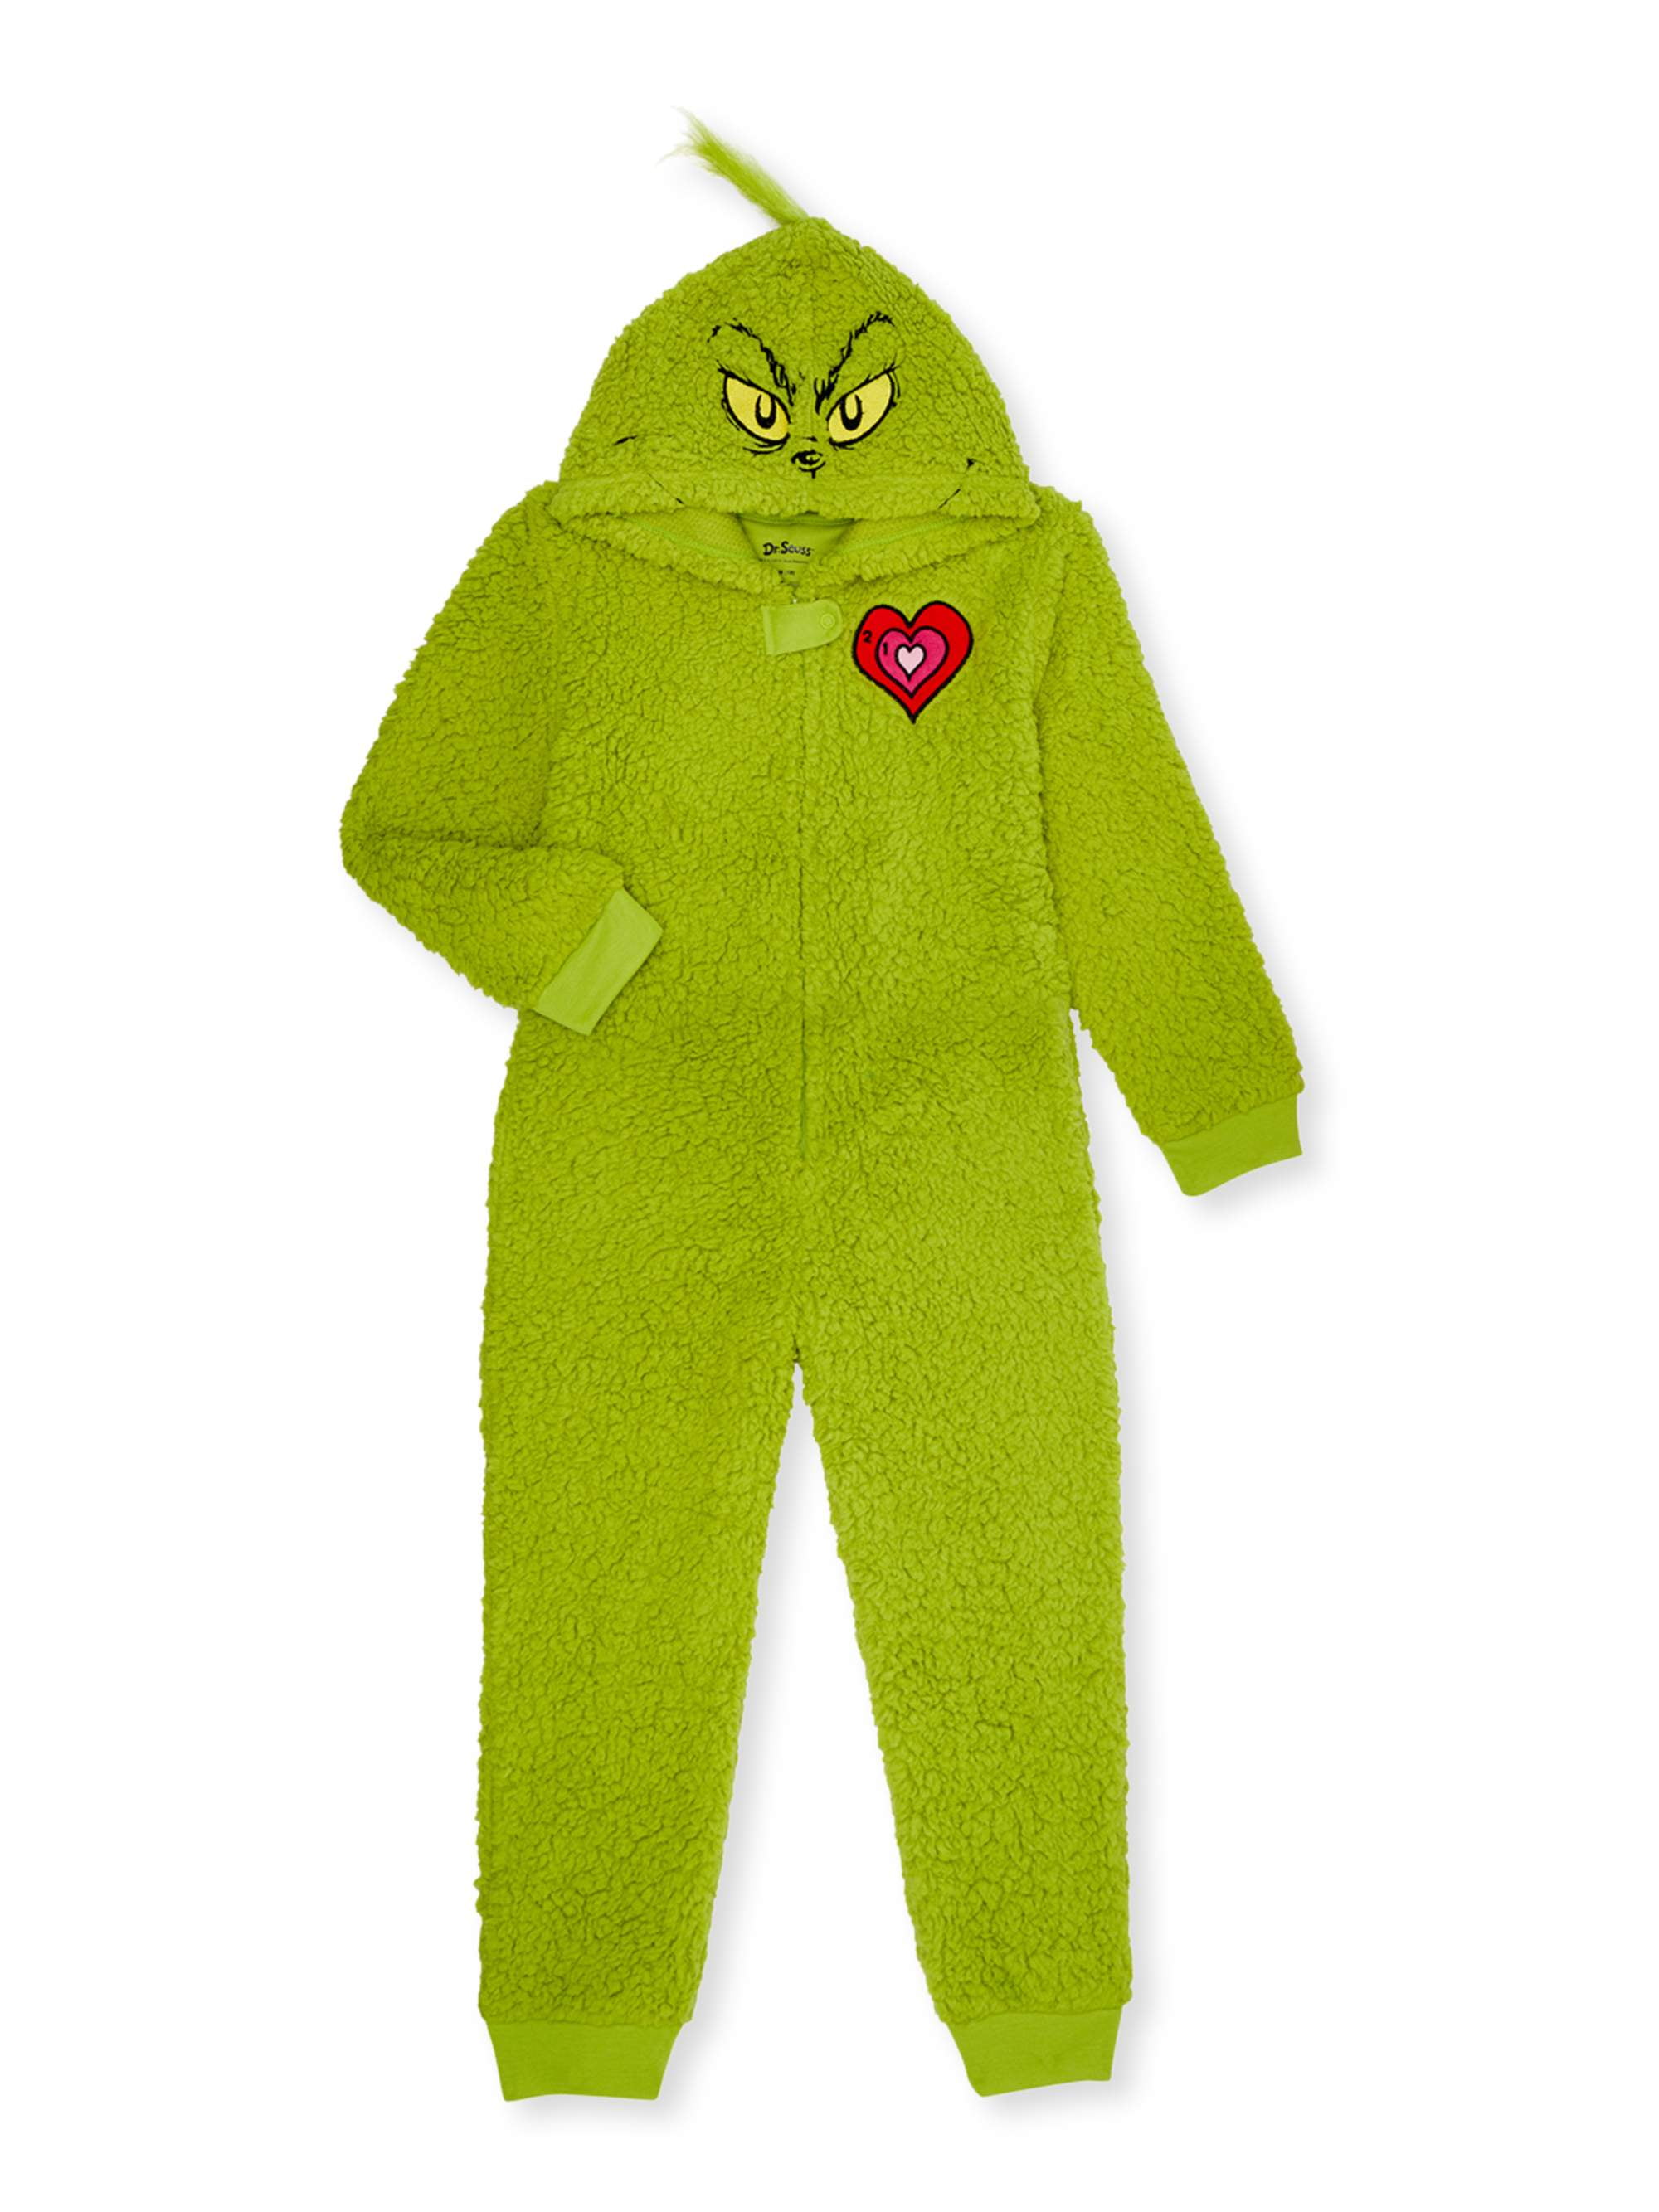 Matching Family Christmas Pajamas Kid's Grinch Union Suit - Walmart.com